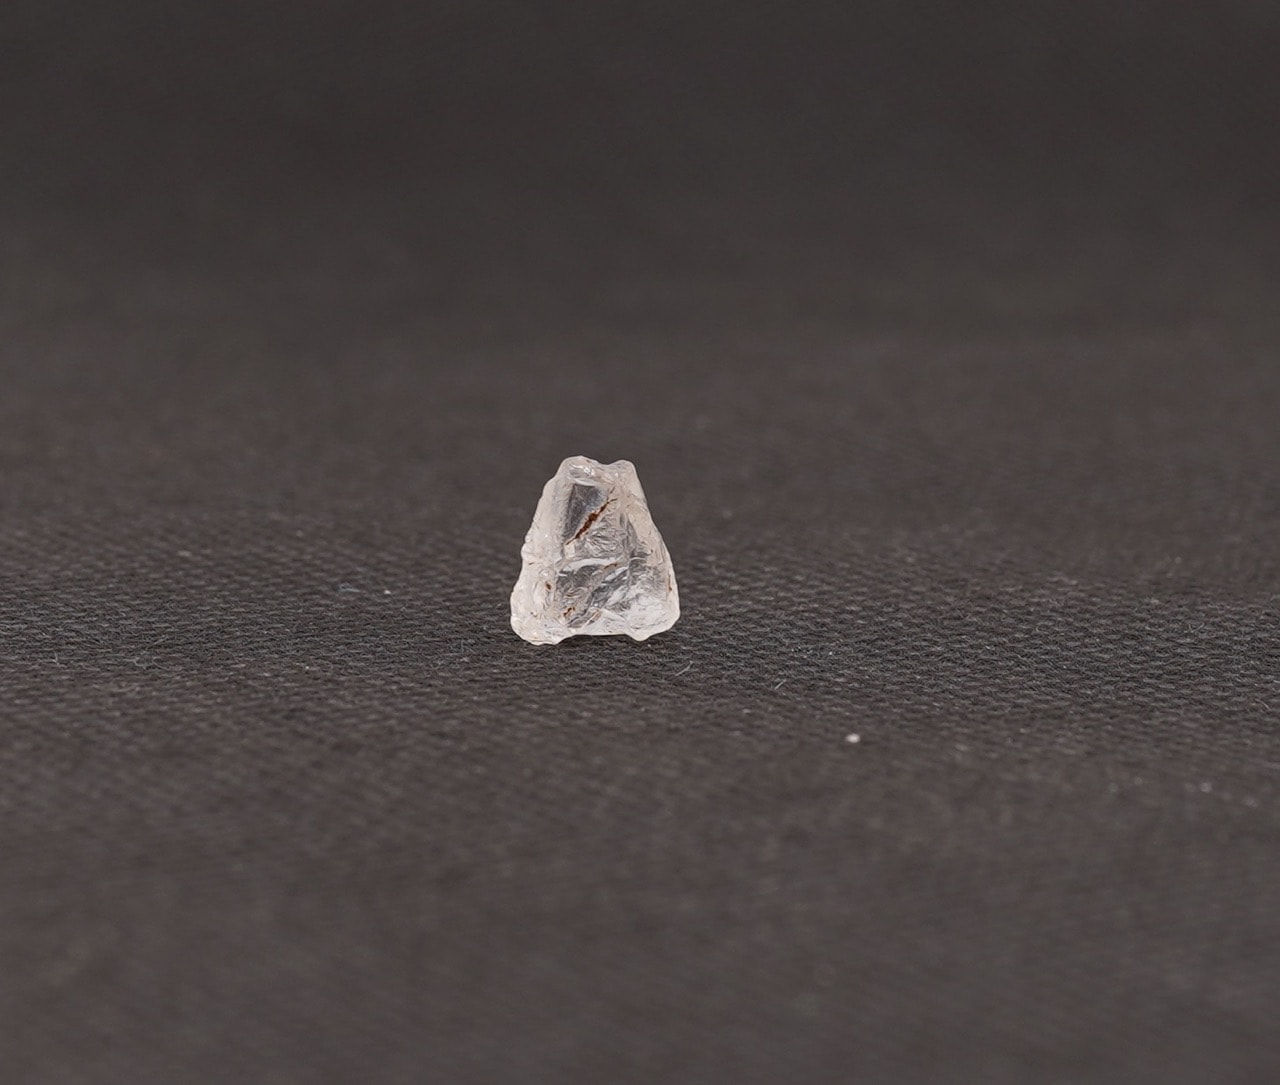 Fenacit nigerian cristal natural unicat f328